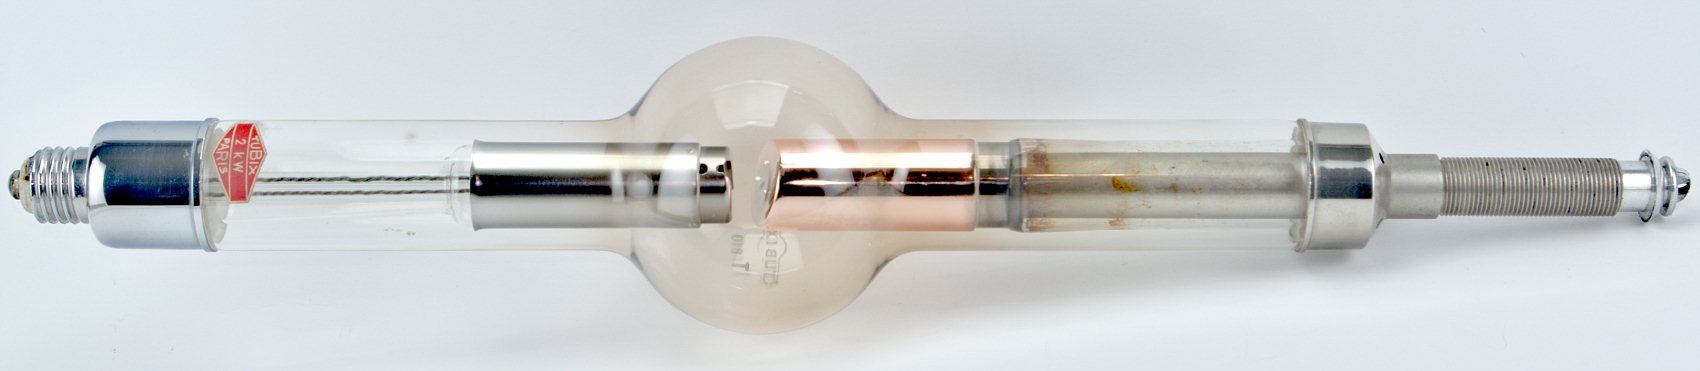 Tube  rayons X TUBIX T810 2kW